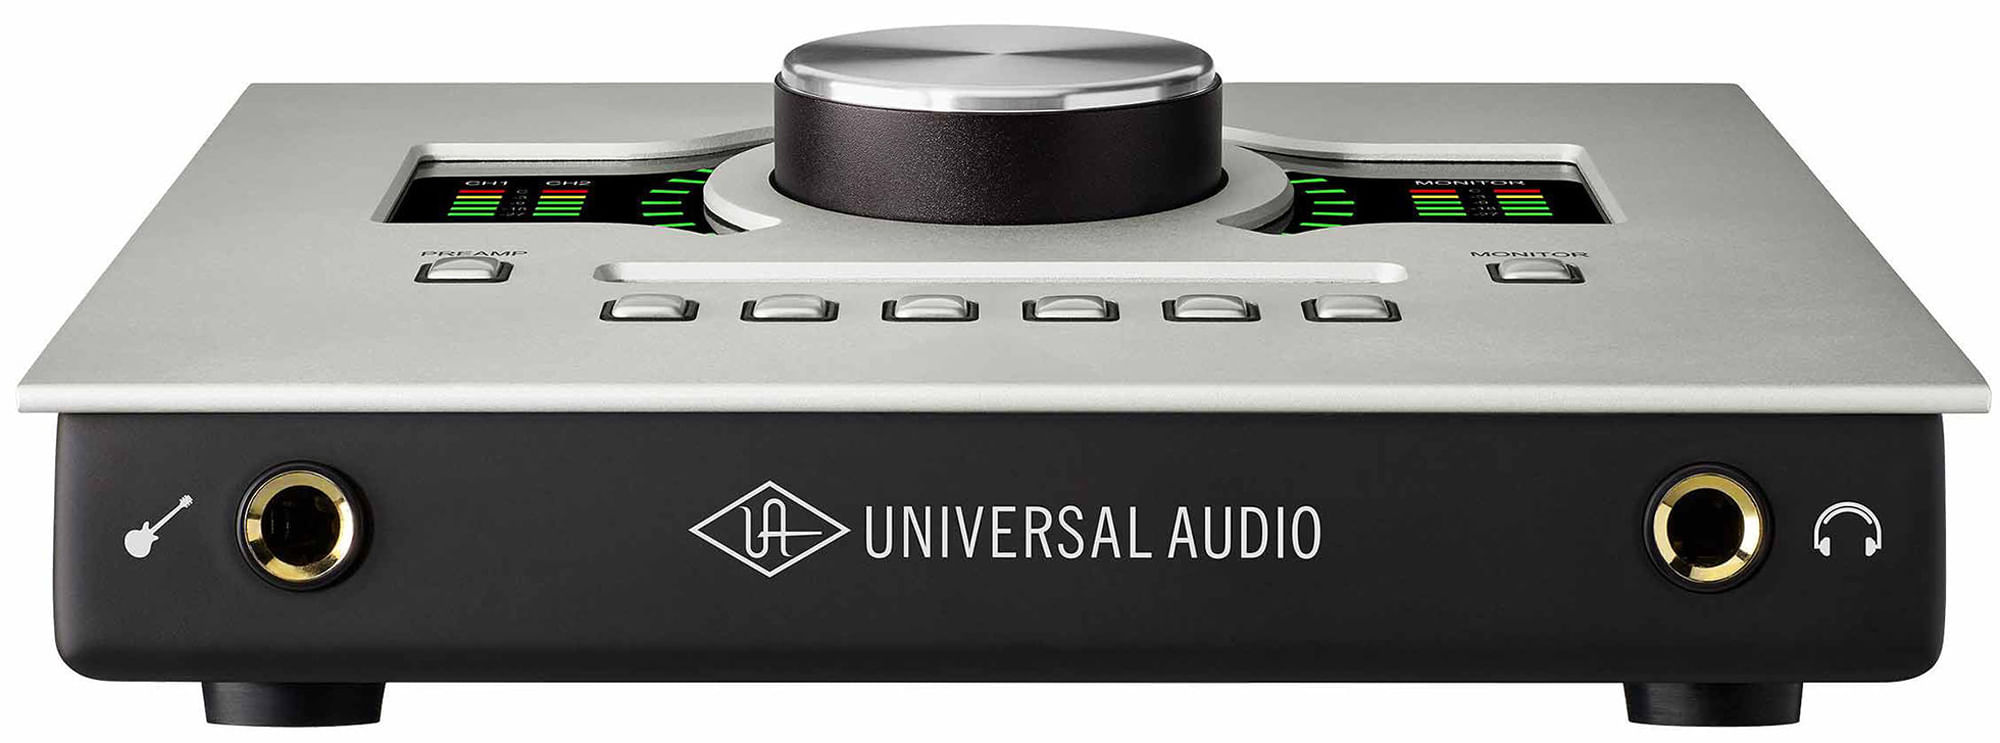 Universal Audio Heritage Edition Apollo Twin USB Audio Interface 